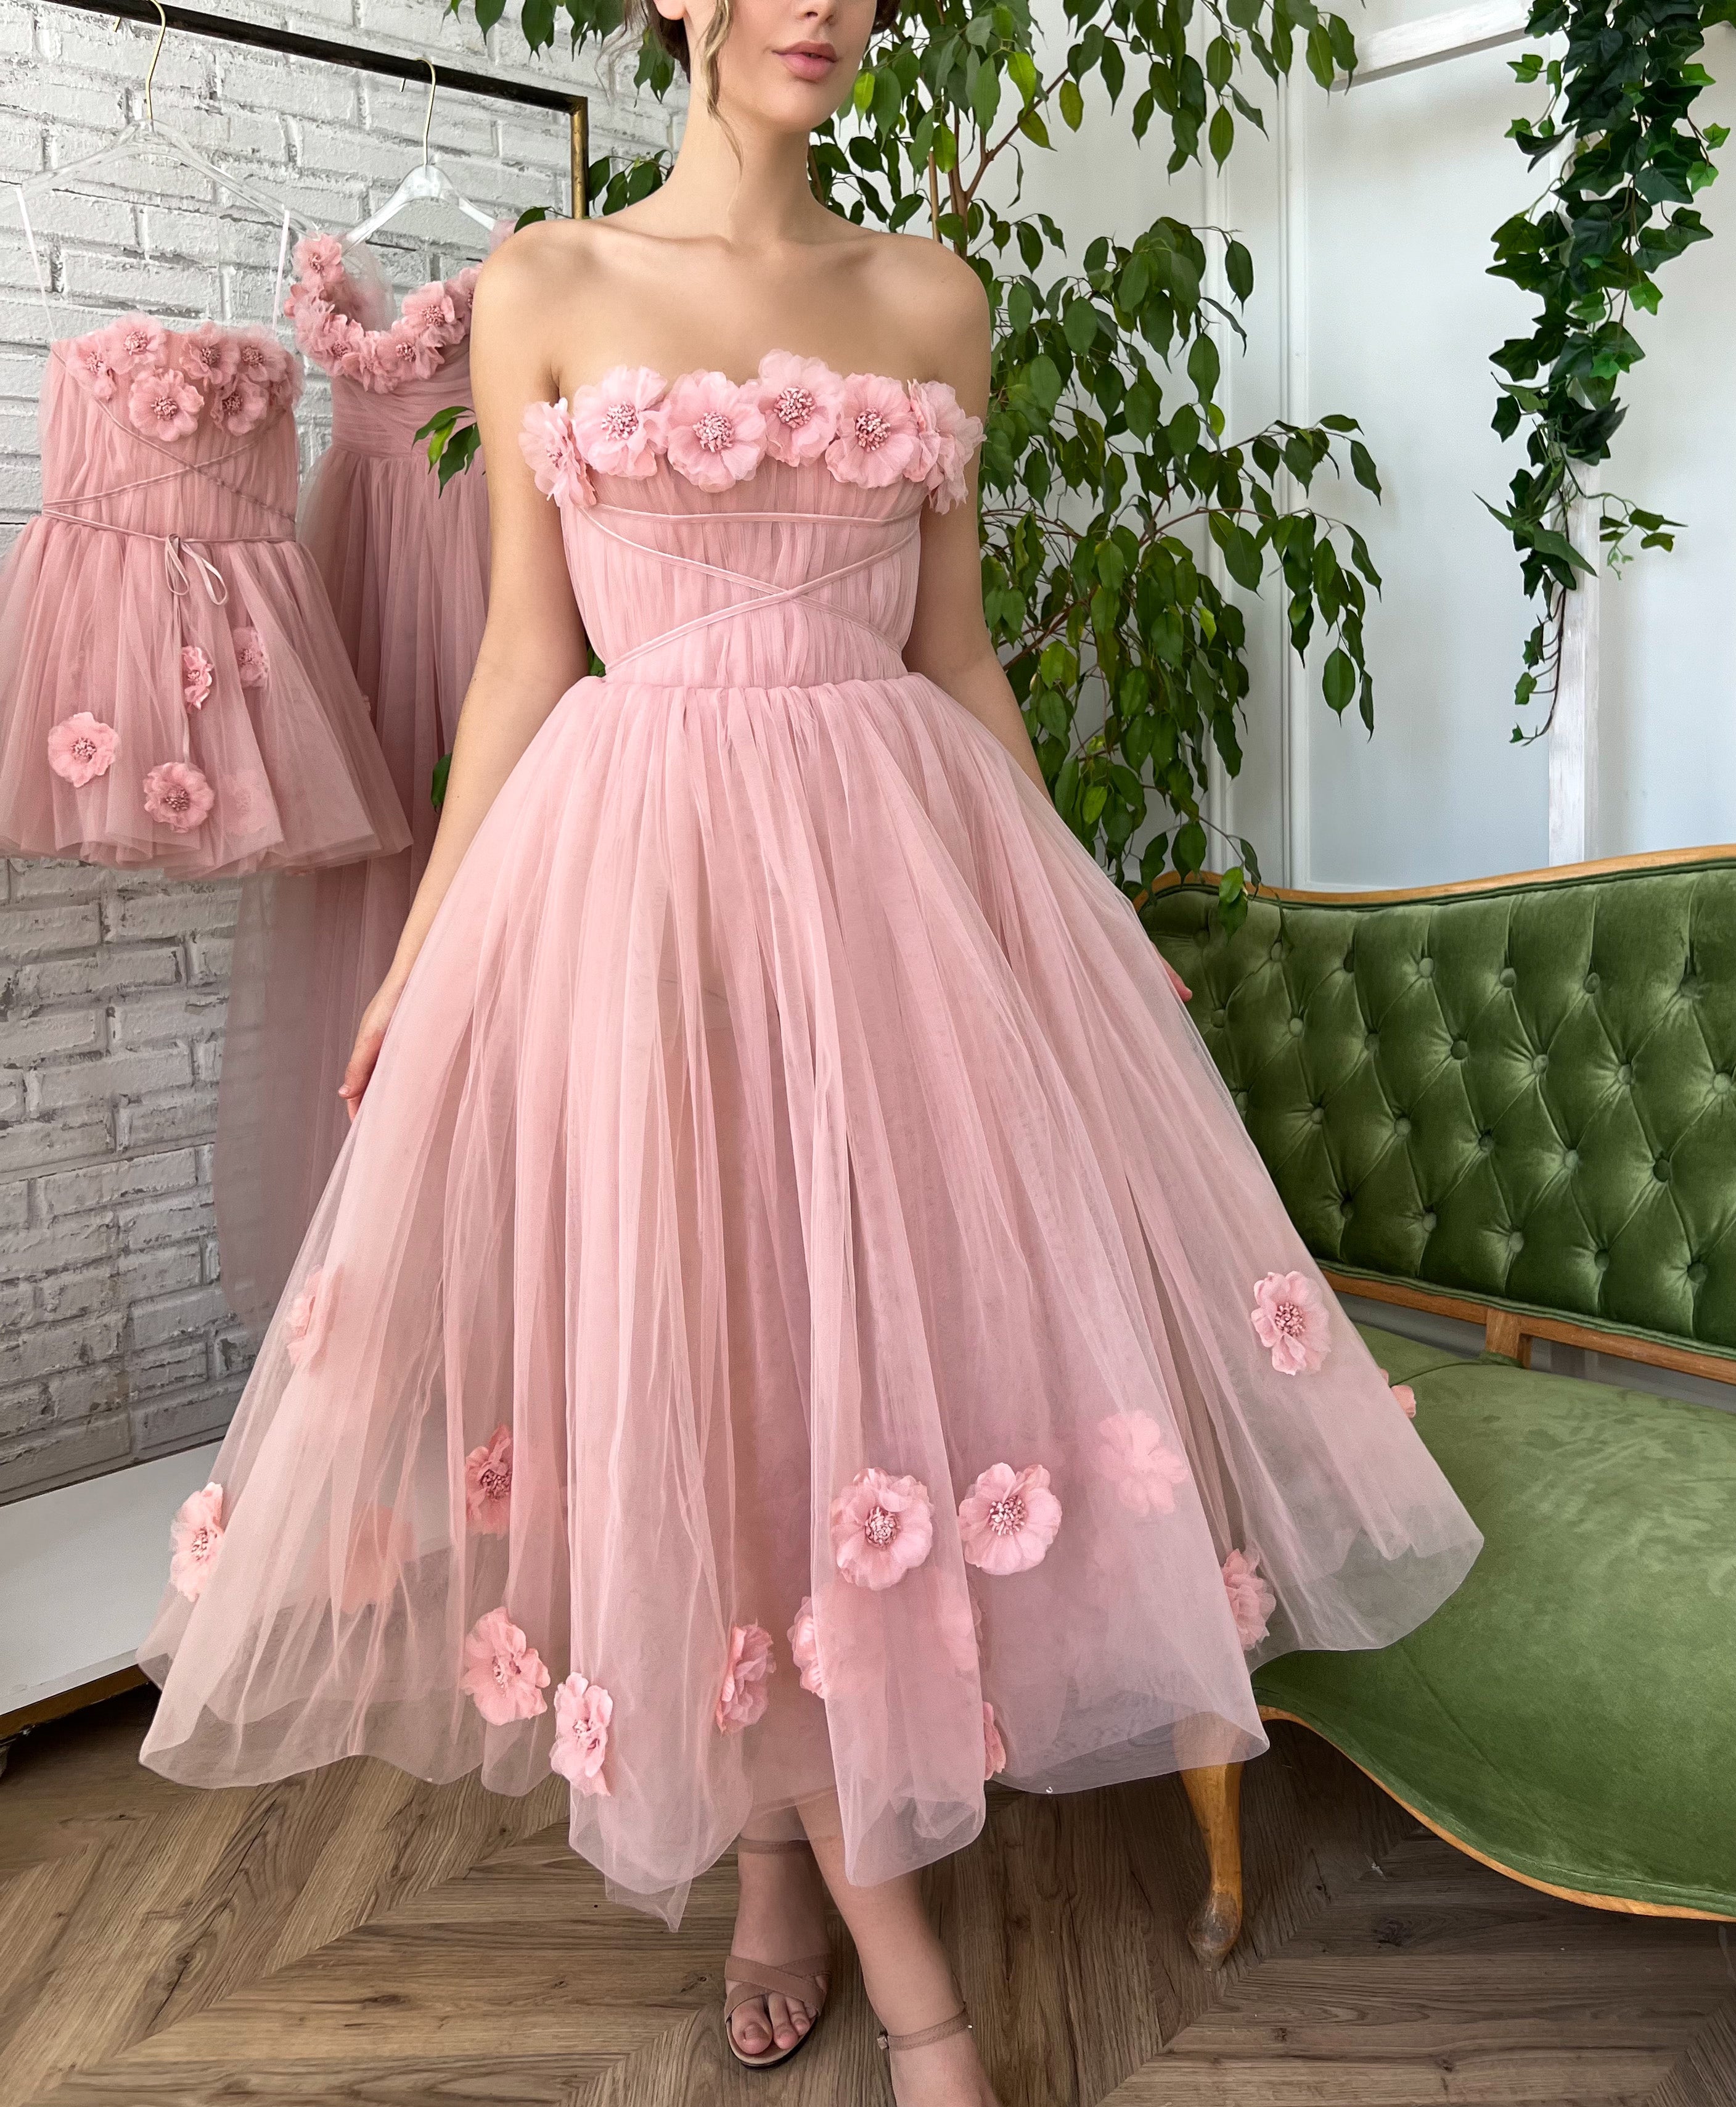 pink.dress